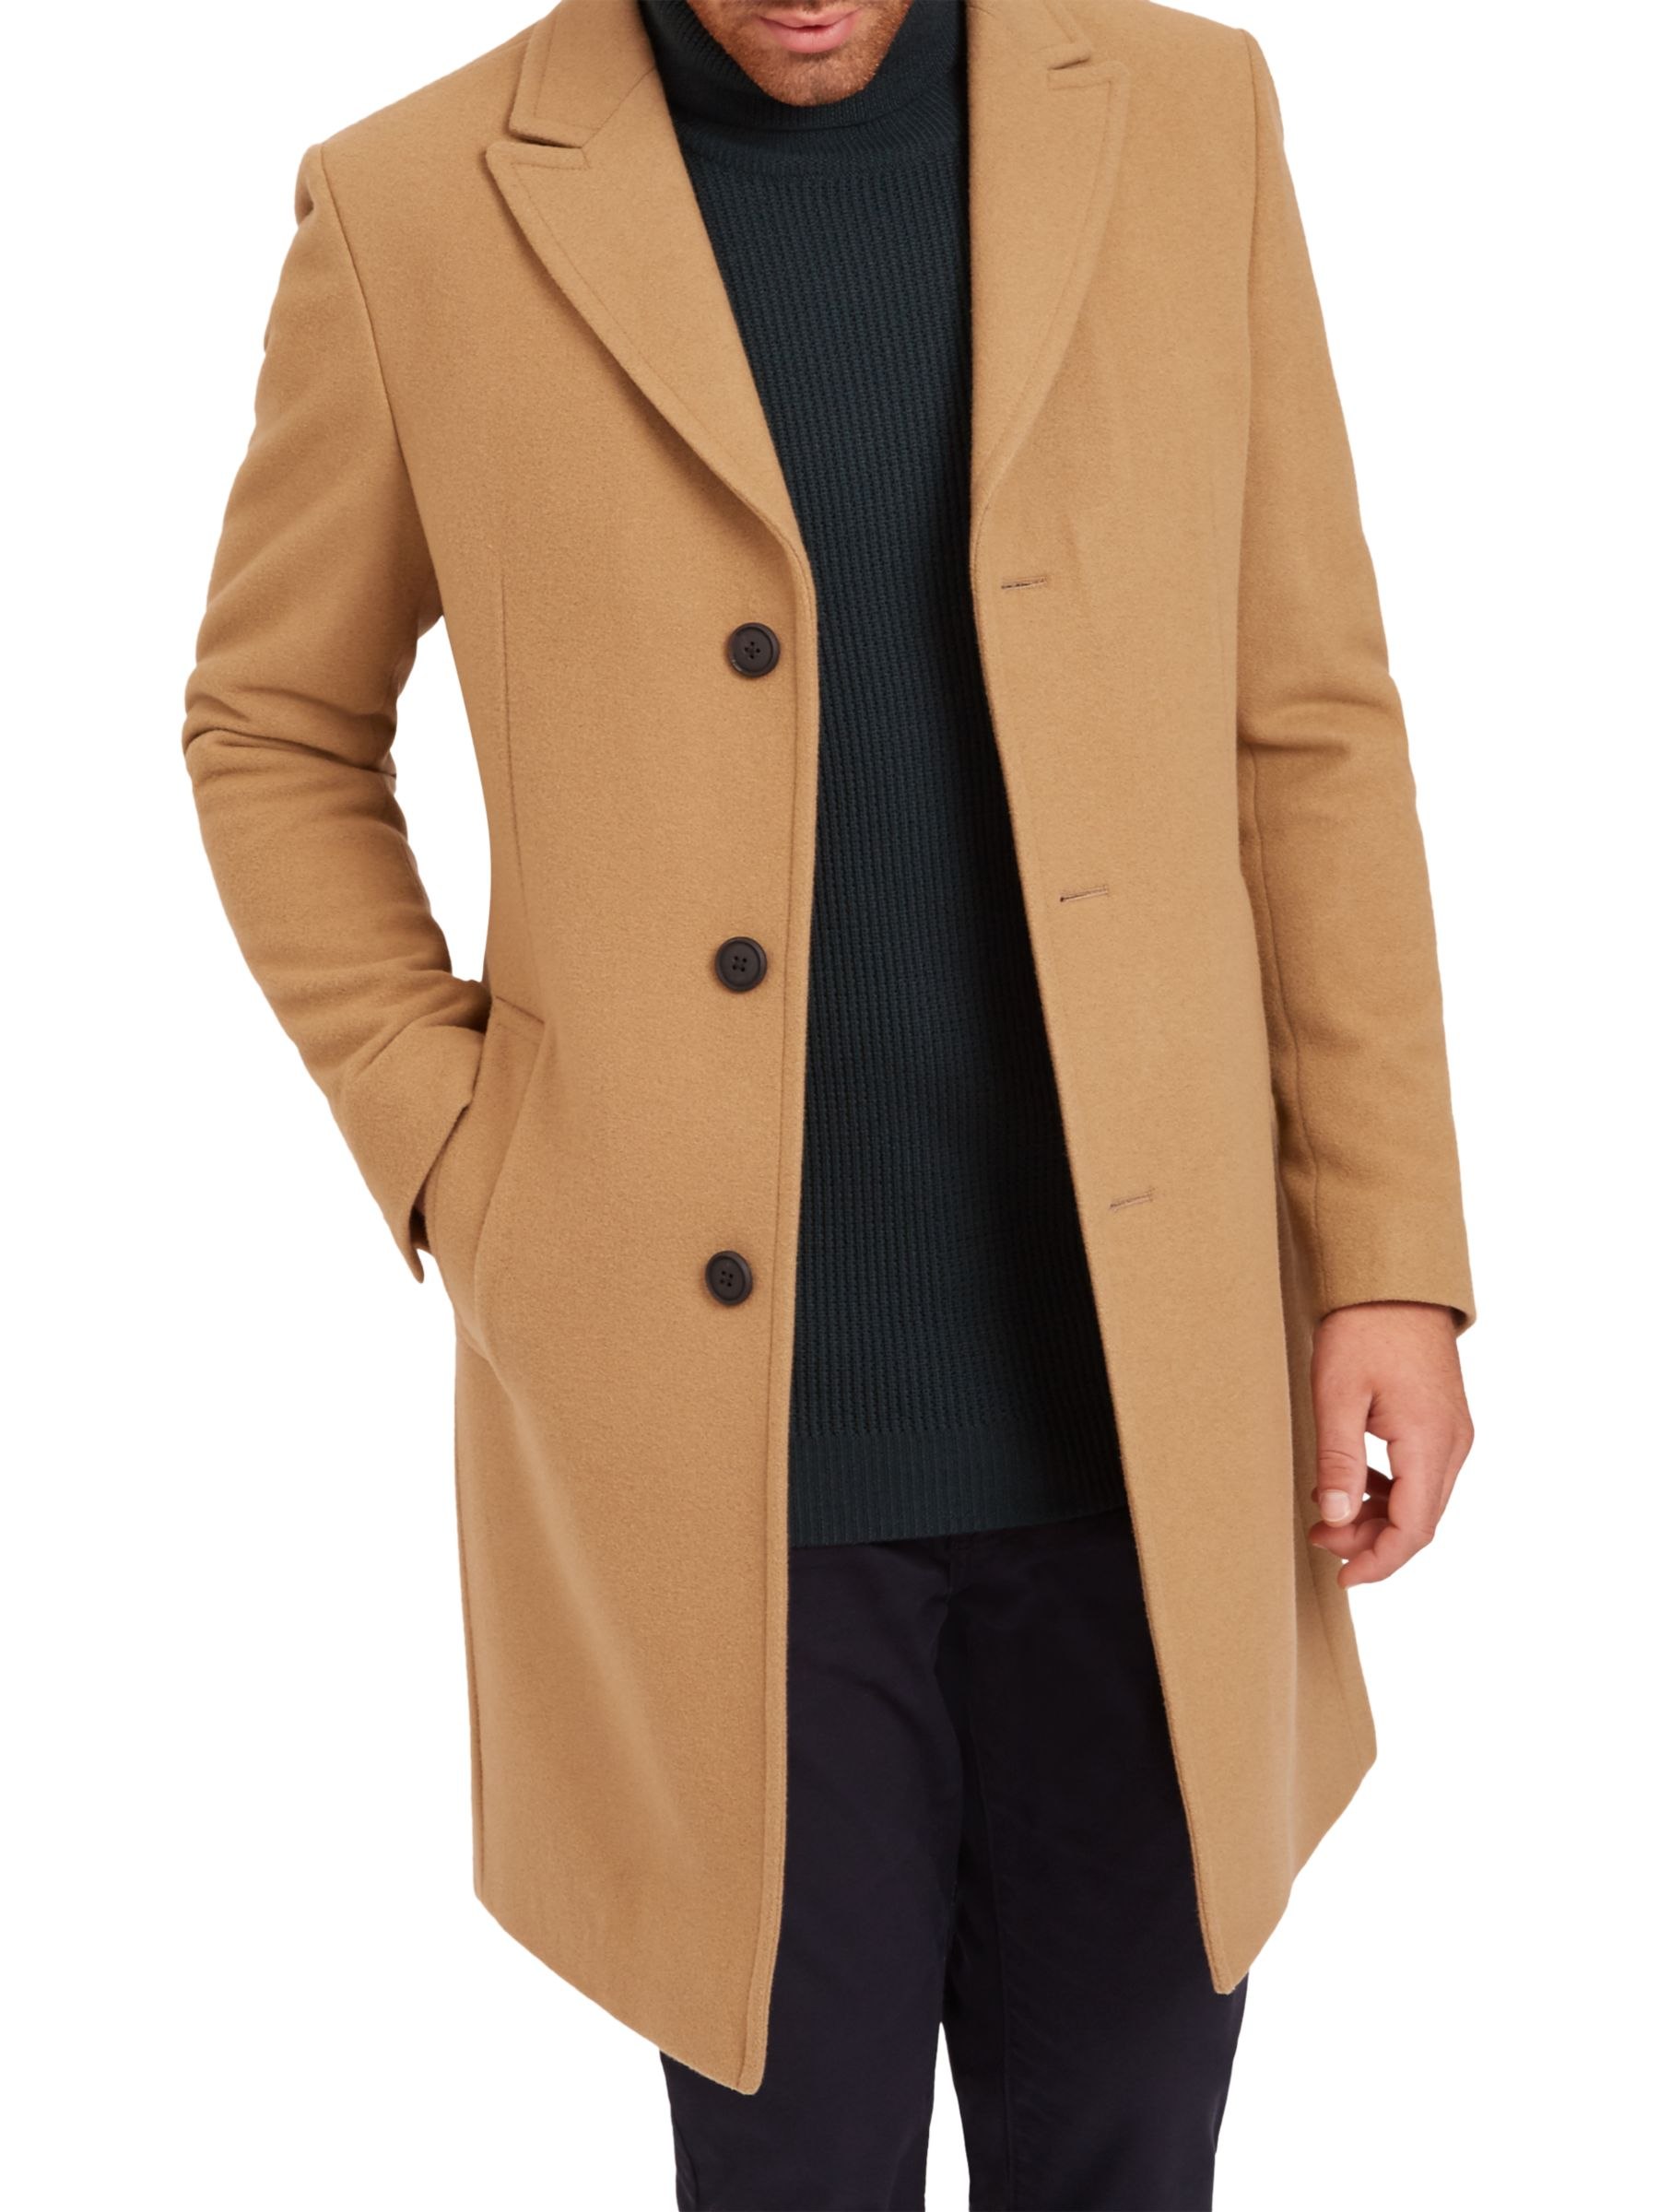 Мужское пальто пермь. Боттега пальто мужское кашемировое пальто. Пальто кэмэл мужское длинное. Пальто Честерфилд мужское.